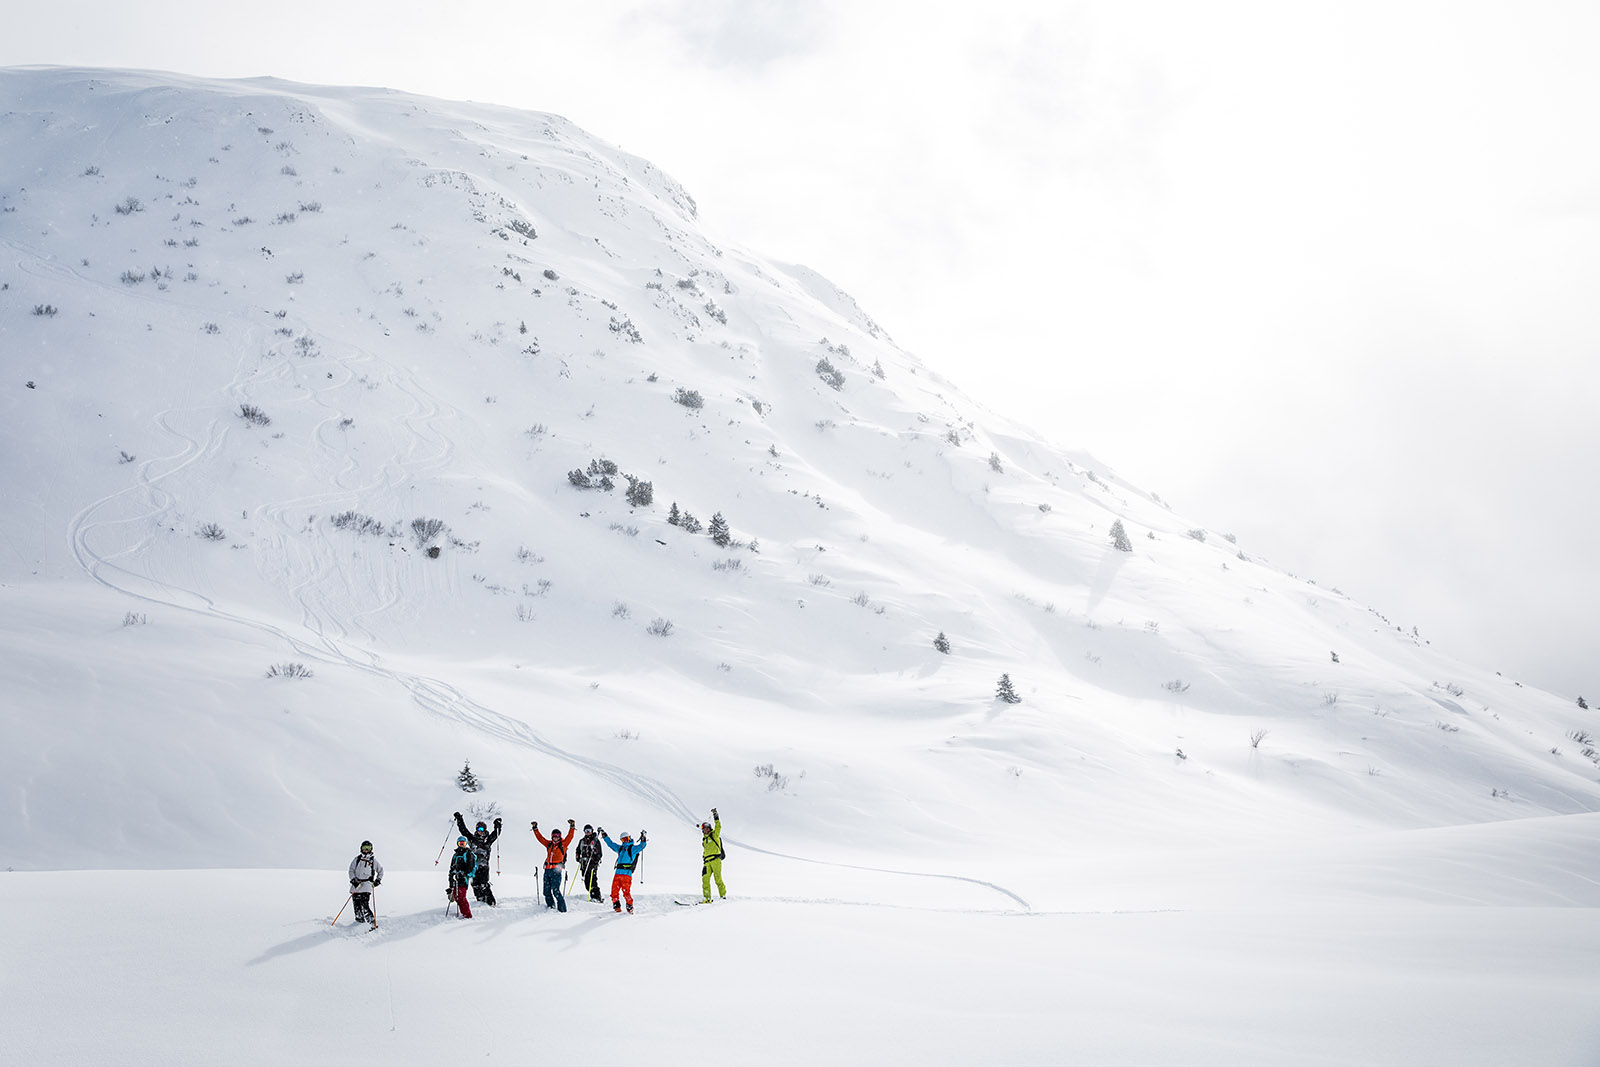  Ski guiding on the Arlberg